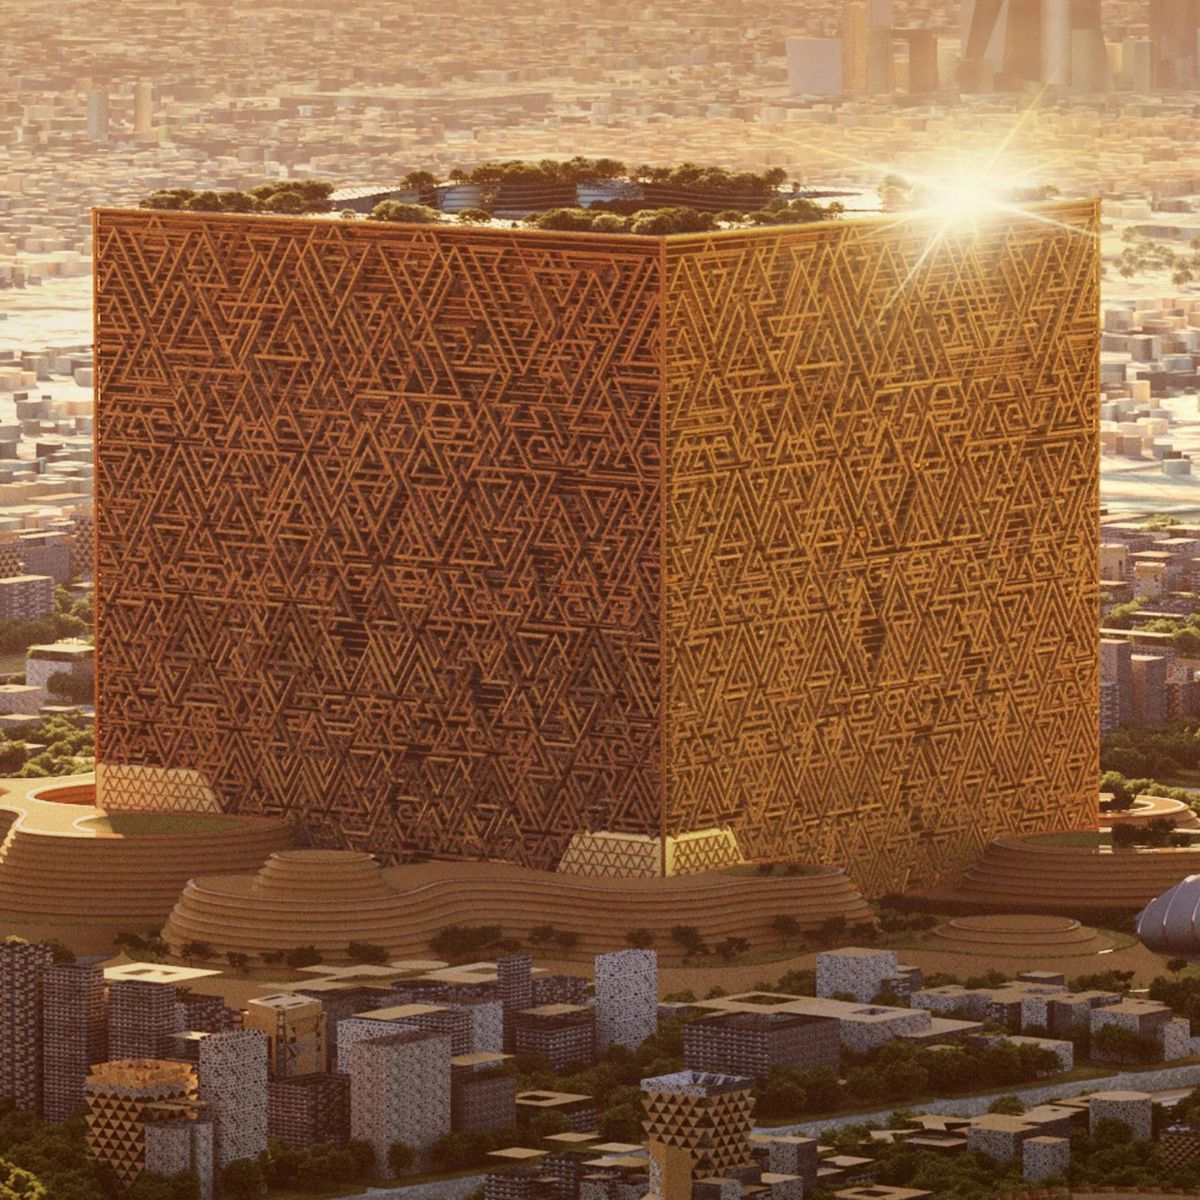 Mukaab building in Riyadh